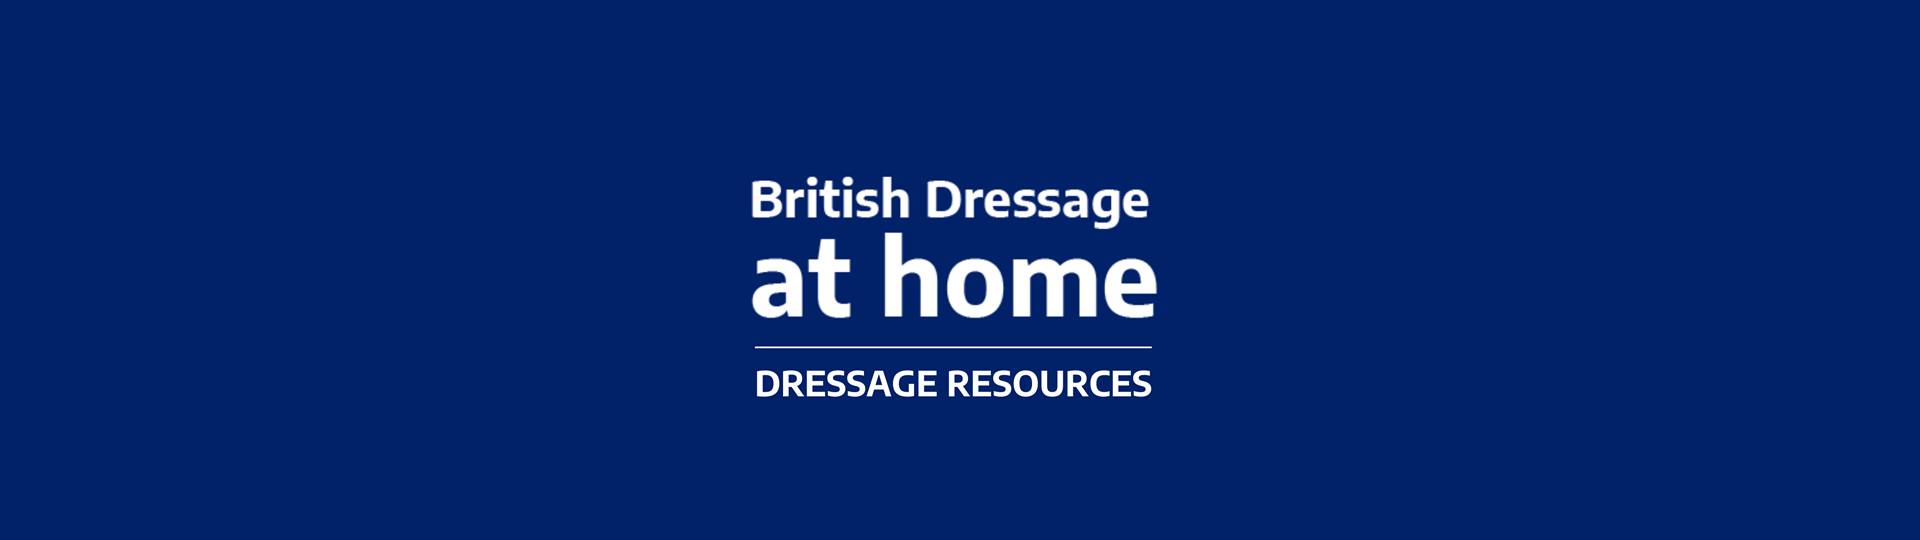 BD At Home Dressage Resources Banner